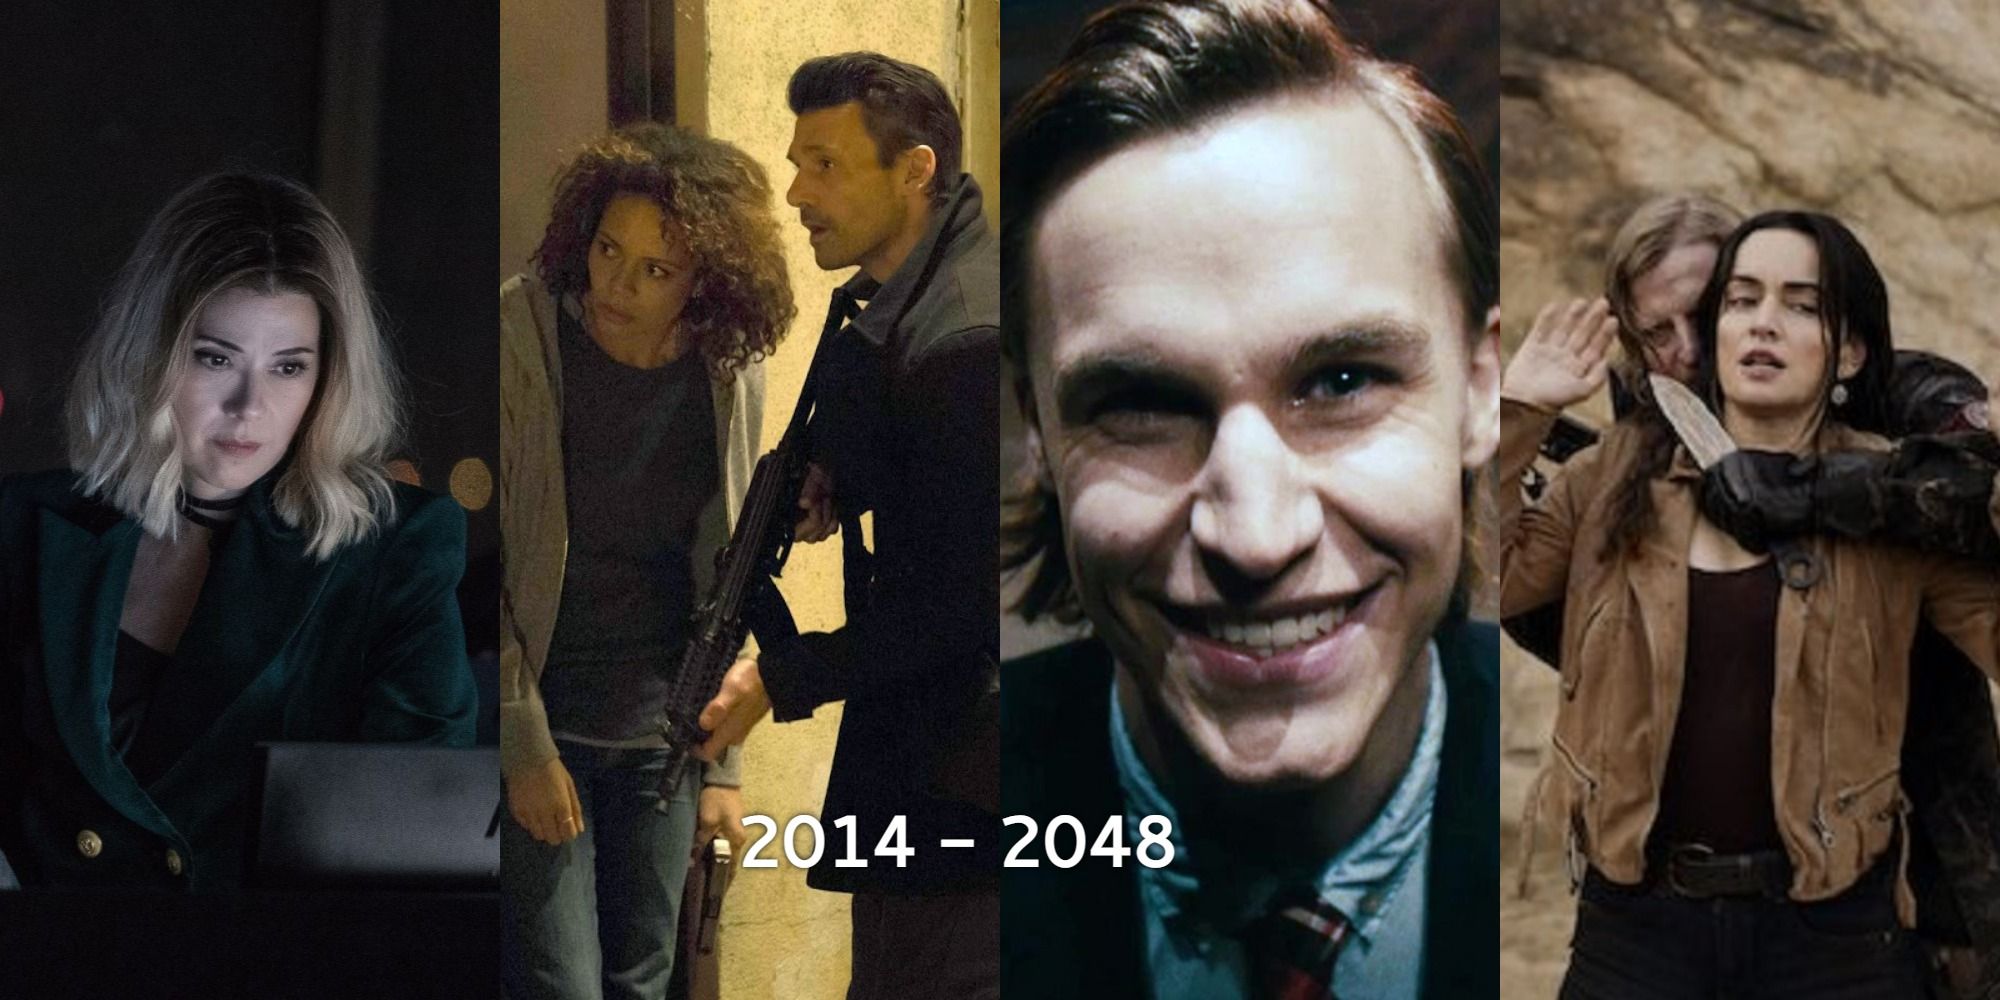 The Purge Movie Timeline Explained: 2014 - 2048